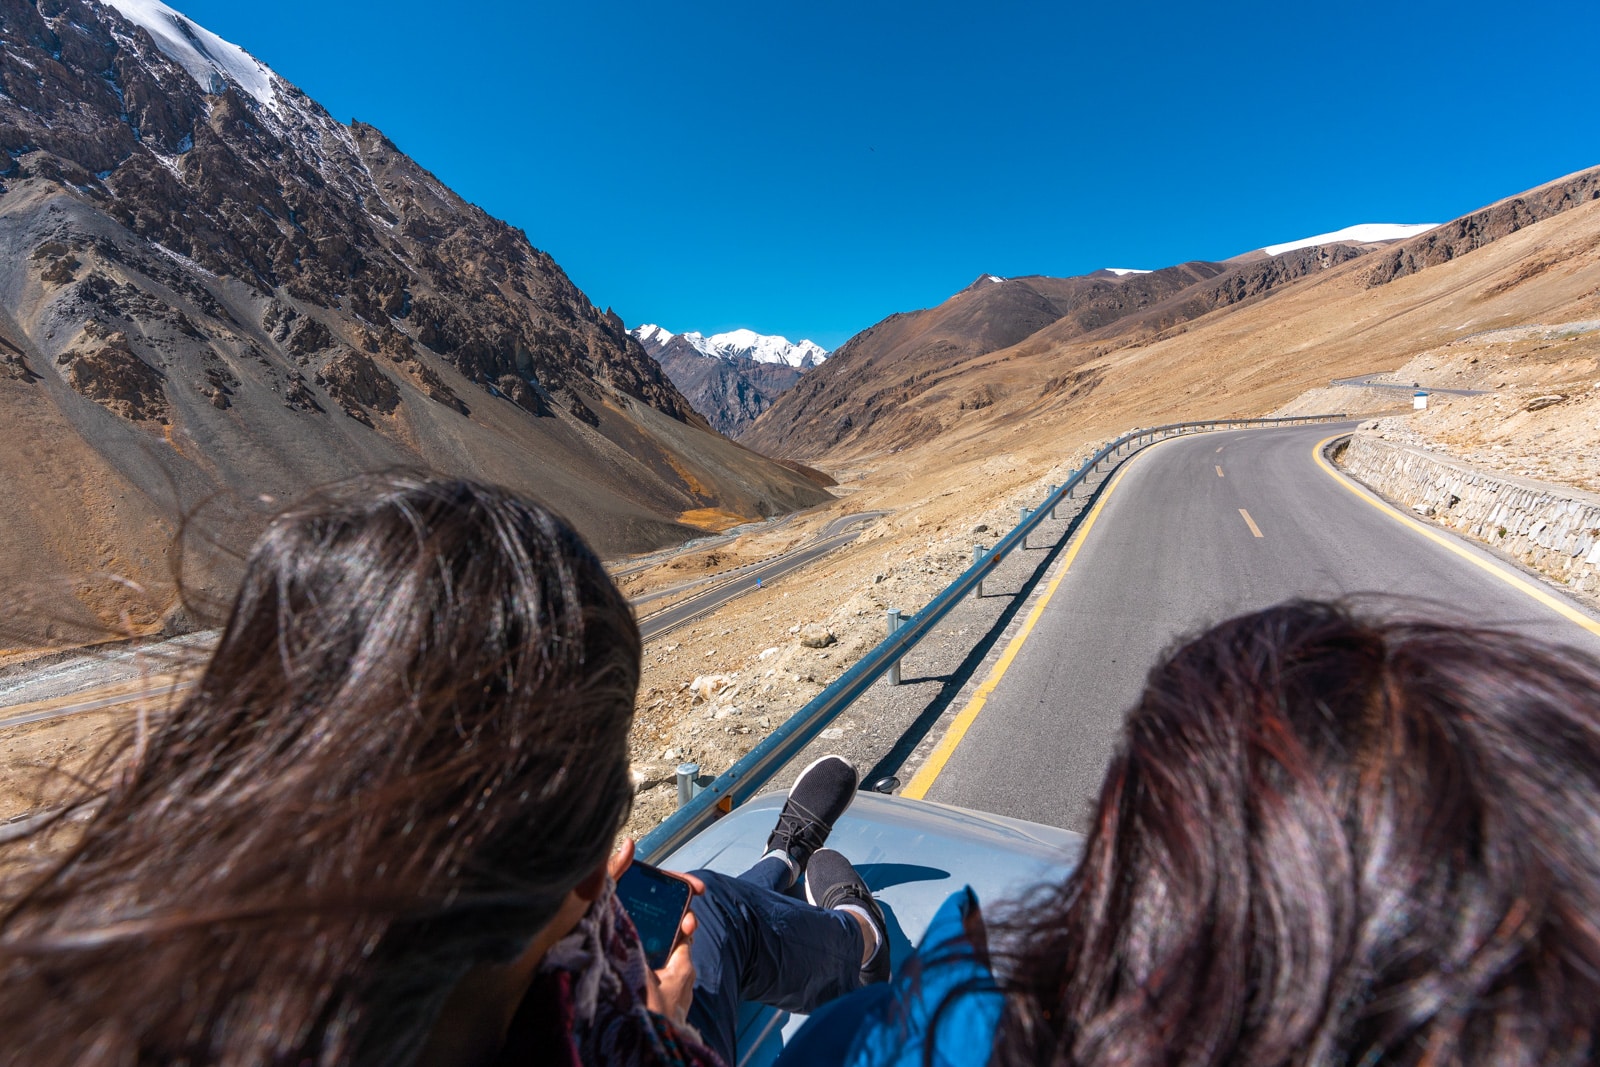 Girls riding on top of a bus to Khunjerab Pass, Pakistan